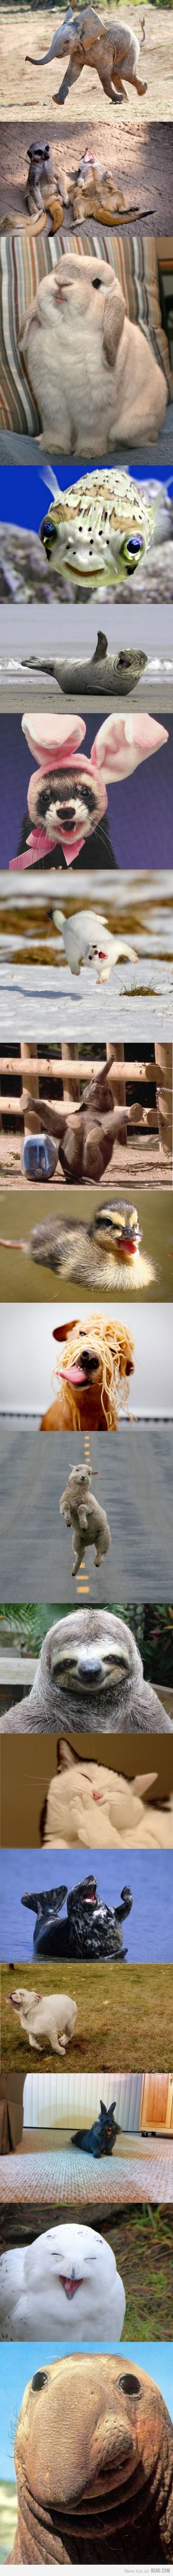 world's happiest animals!